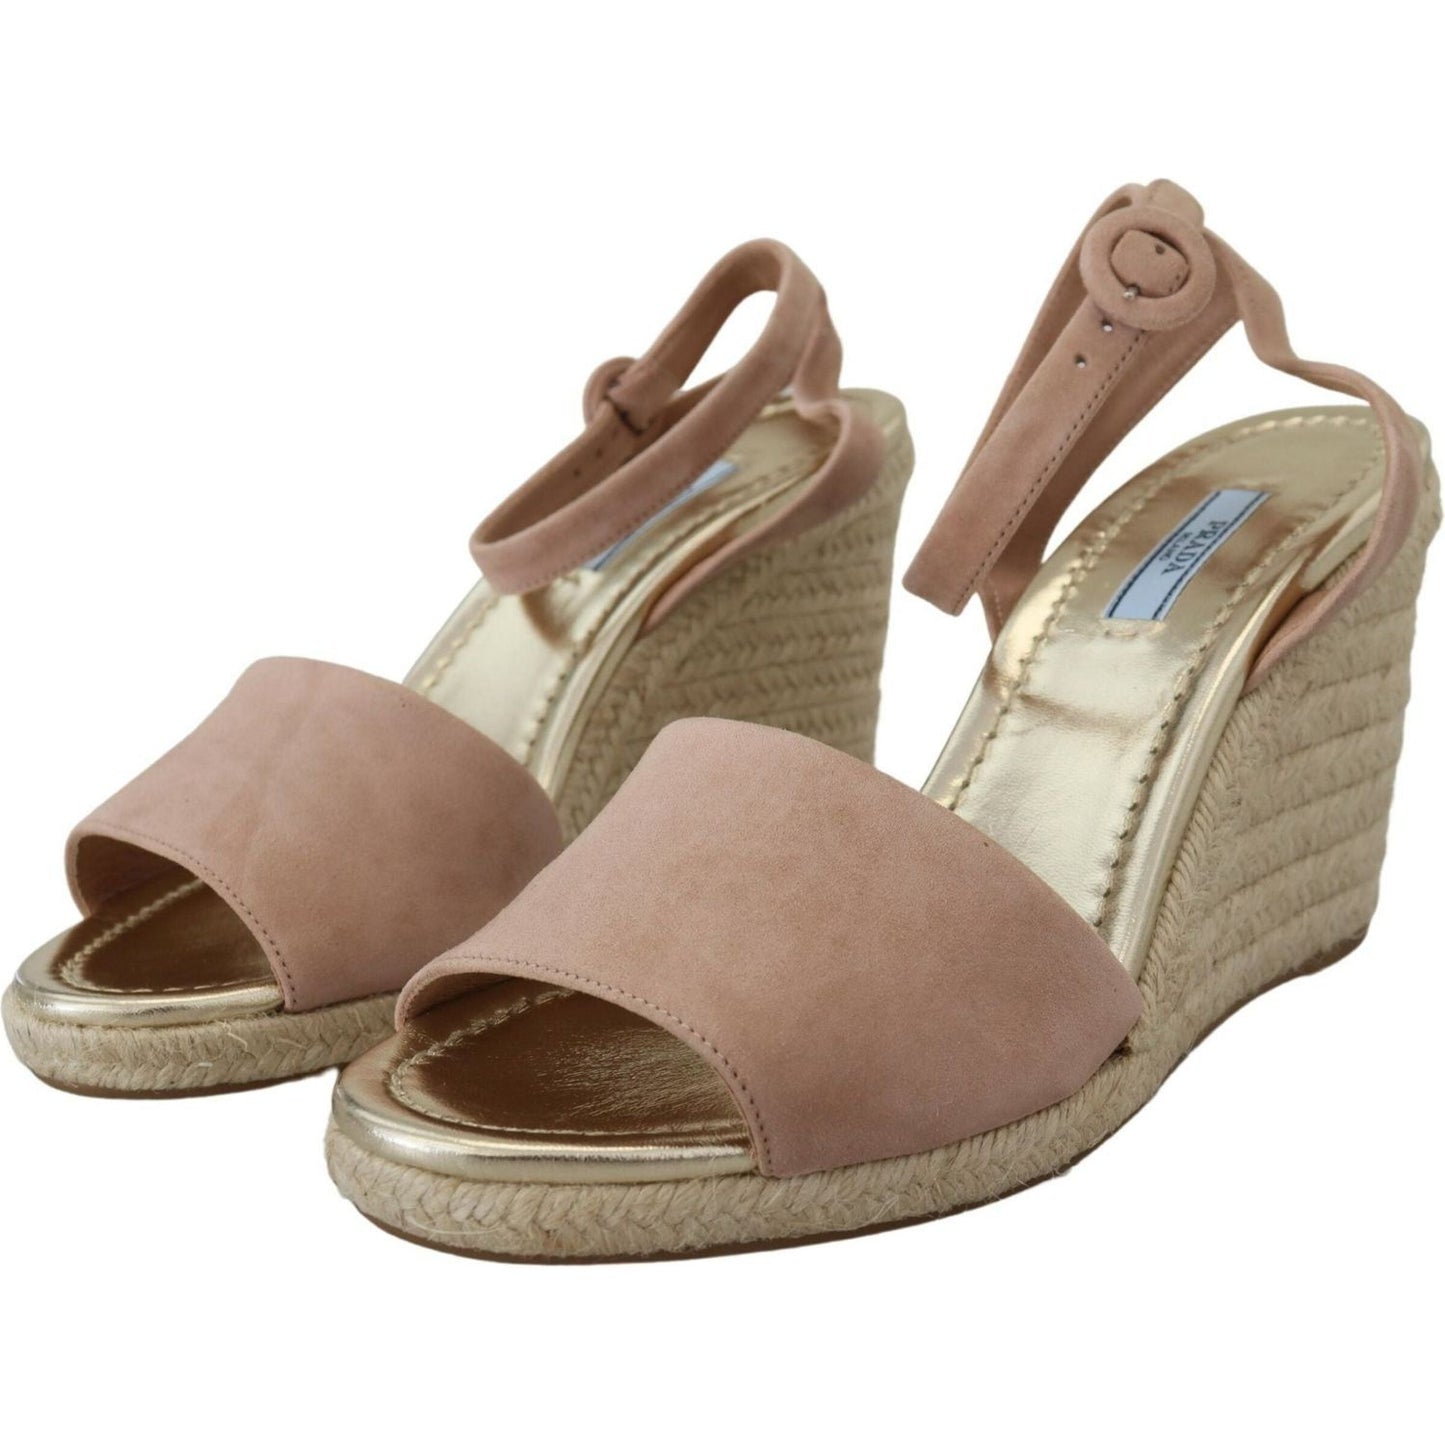 Prada Elegant Suede Ankle Strap Wedge Sandals pink-suede-leather-ankle-strap-sandals IMG_8317-scaled-dcb1ec3d-5ec.jpg